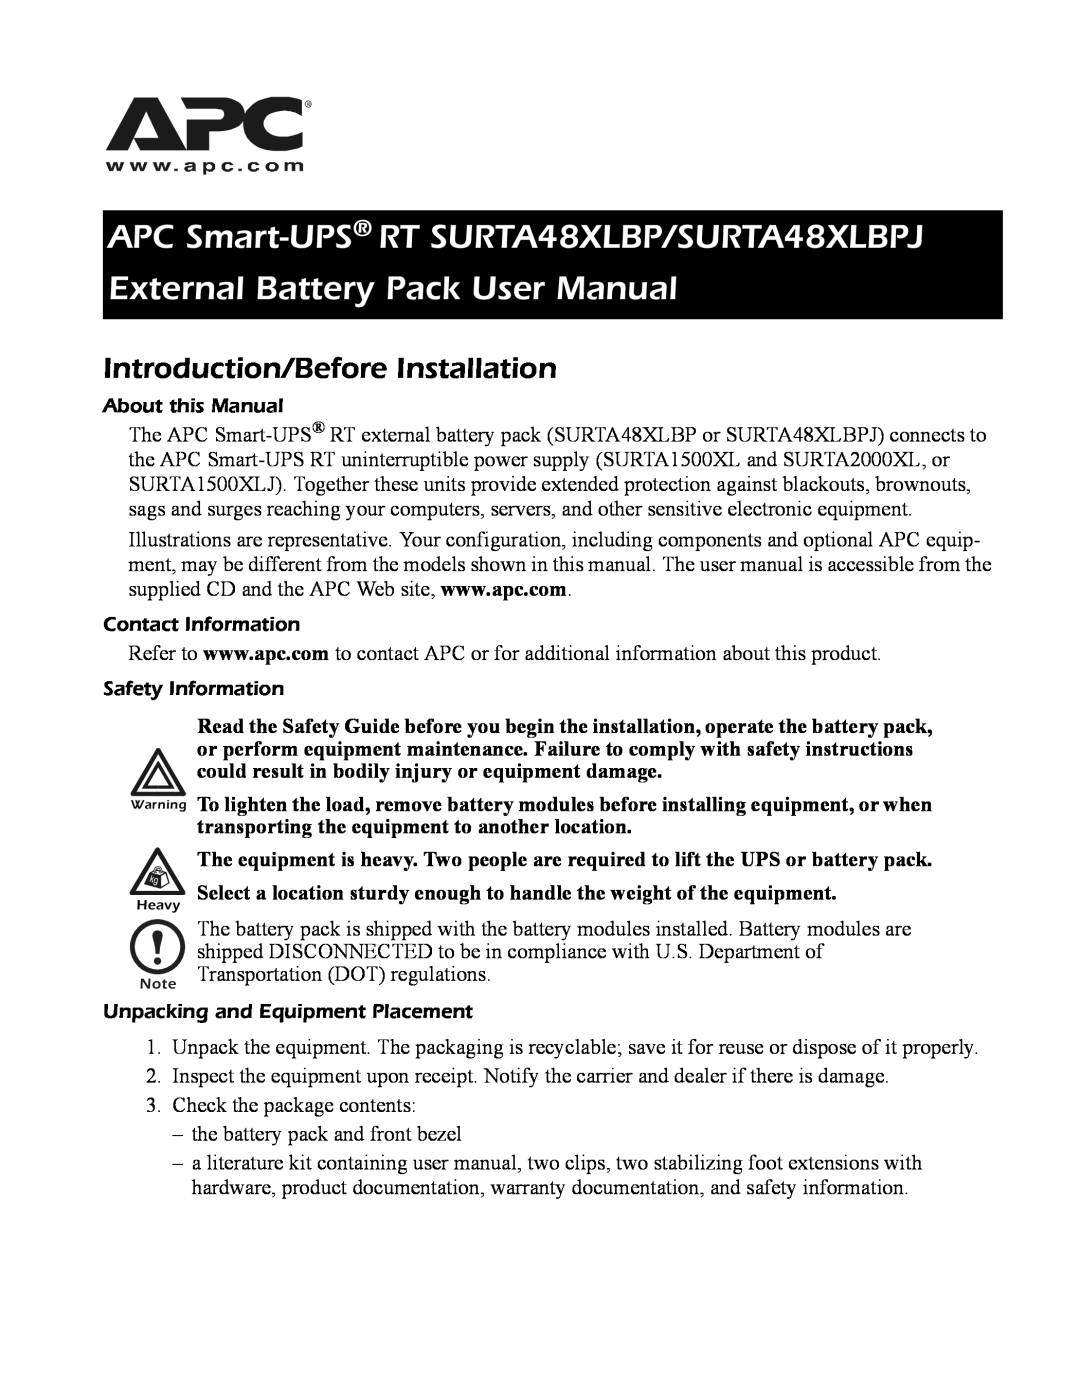 APC user manual Introduction/Before Installation, APC Smart-UPS RT SURTA48XLBP/SURTA48XLBPJ 